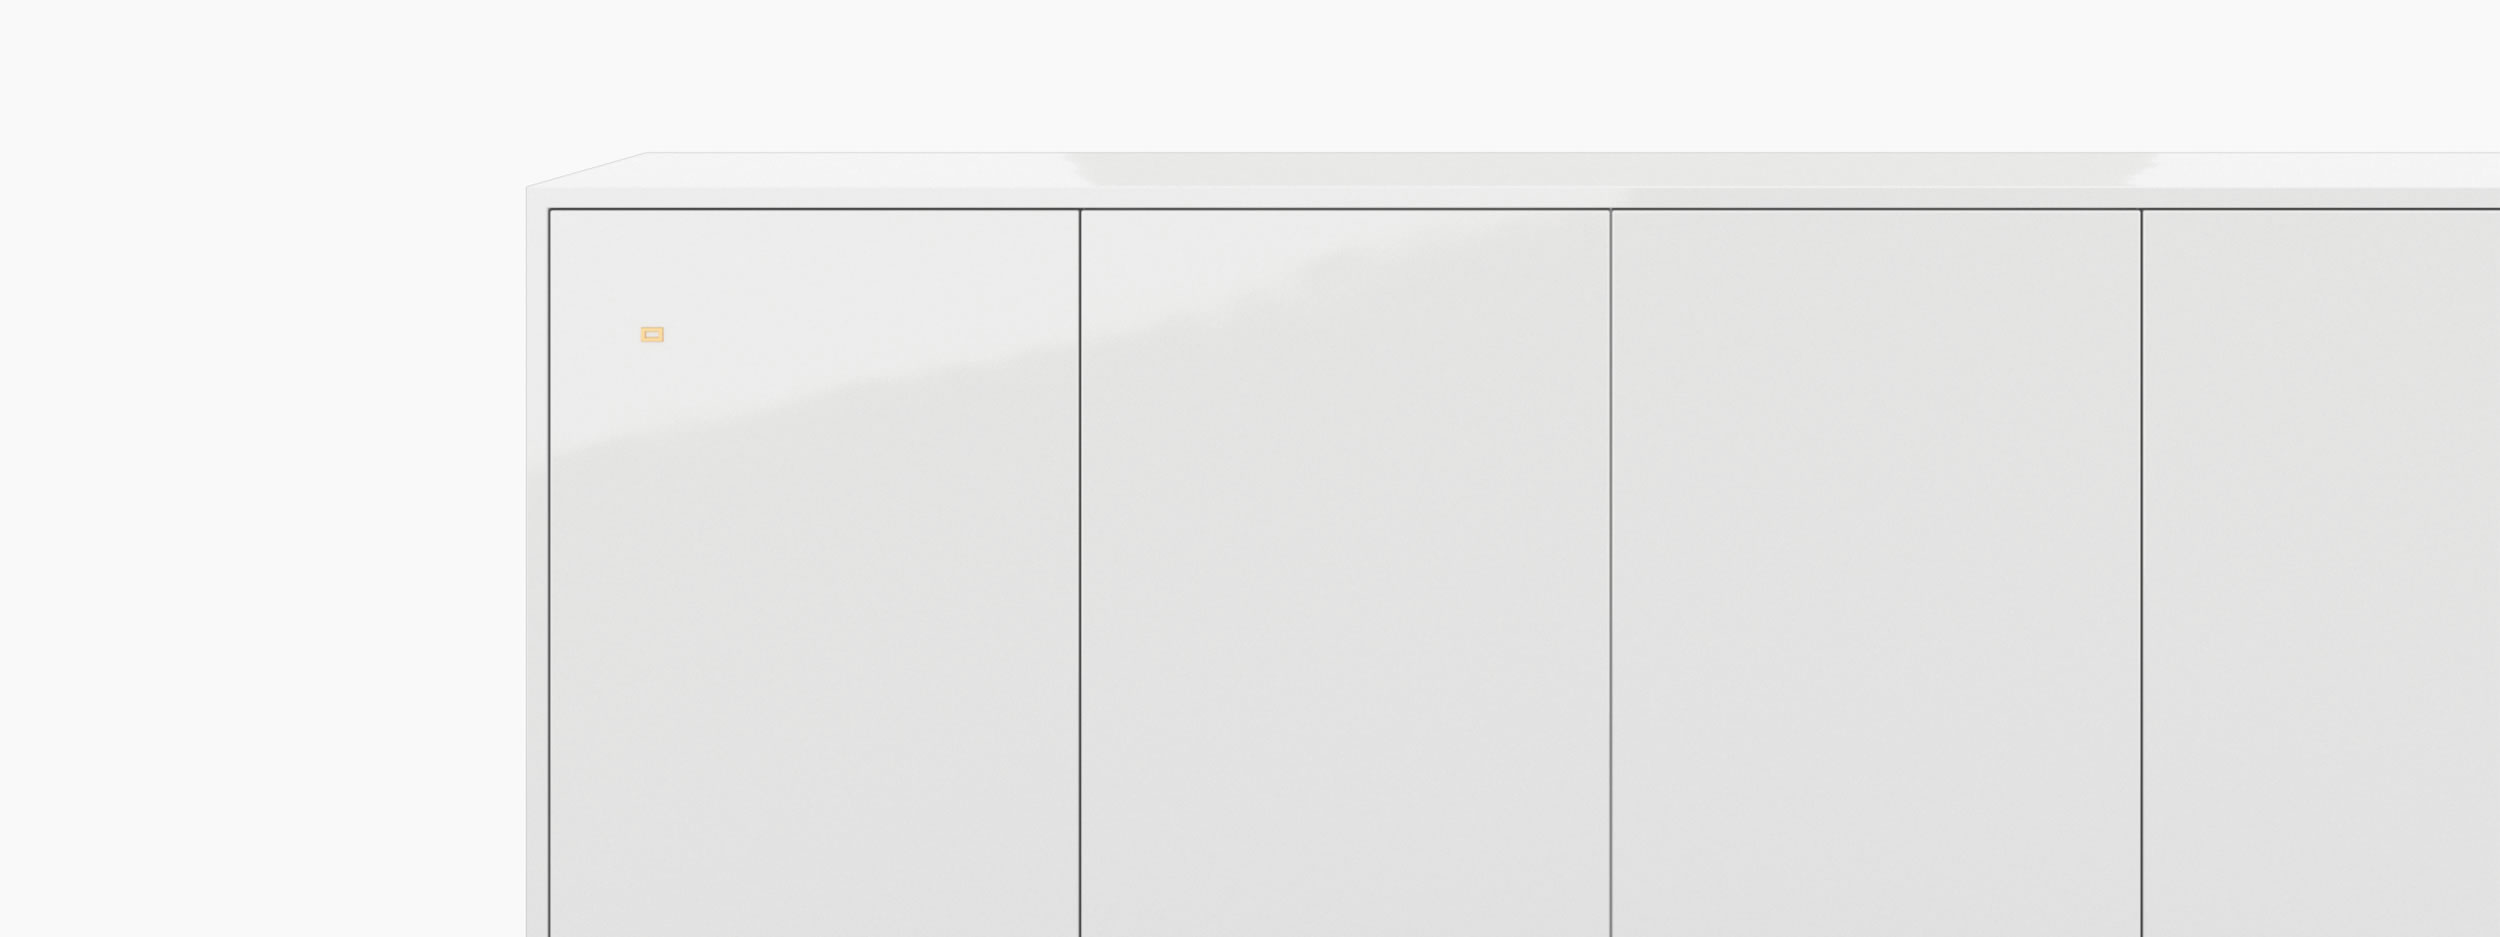 Sideboard quader weiss white spaces Buero collectible design Sideboards FS 64 FELIX SCHWAKE RECHTECK